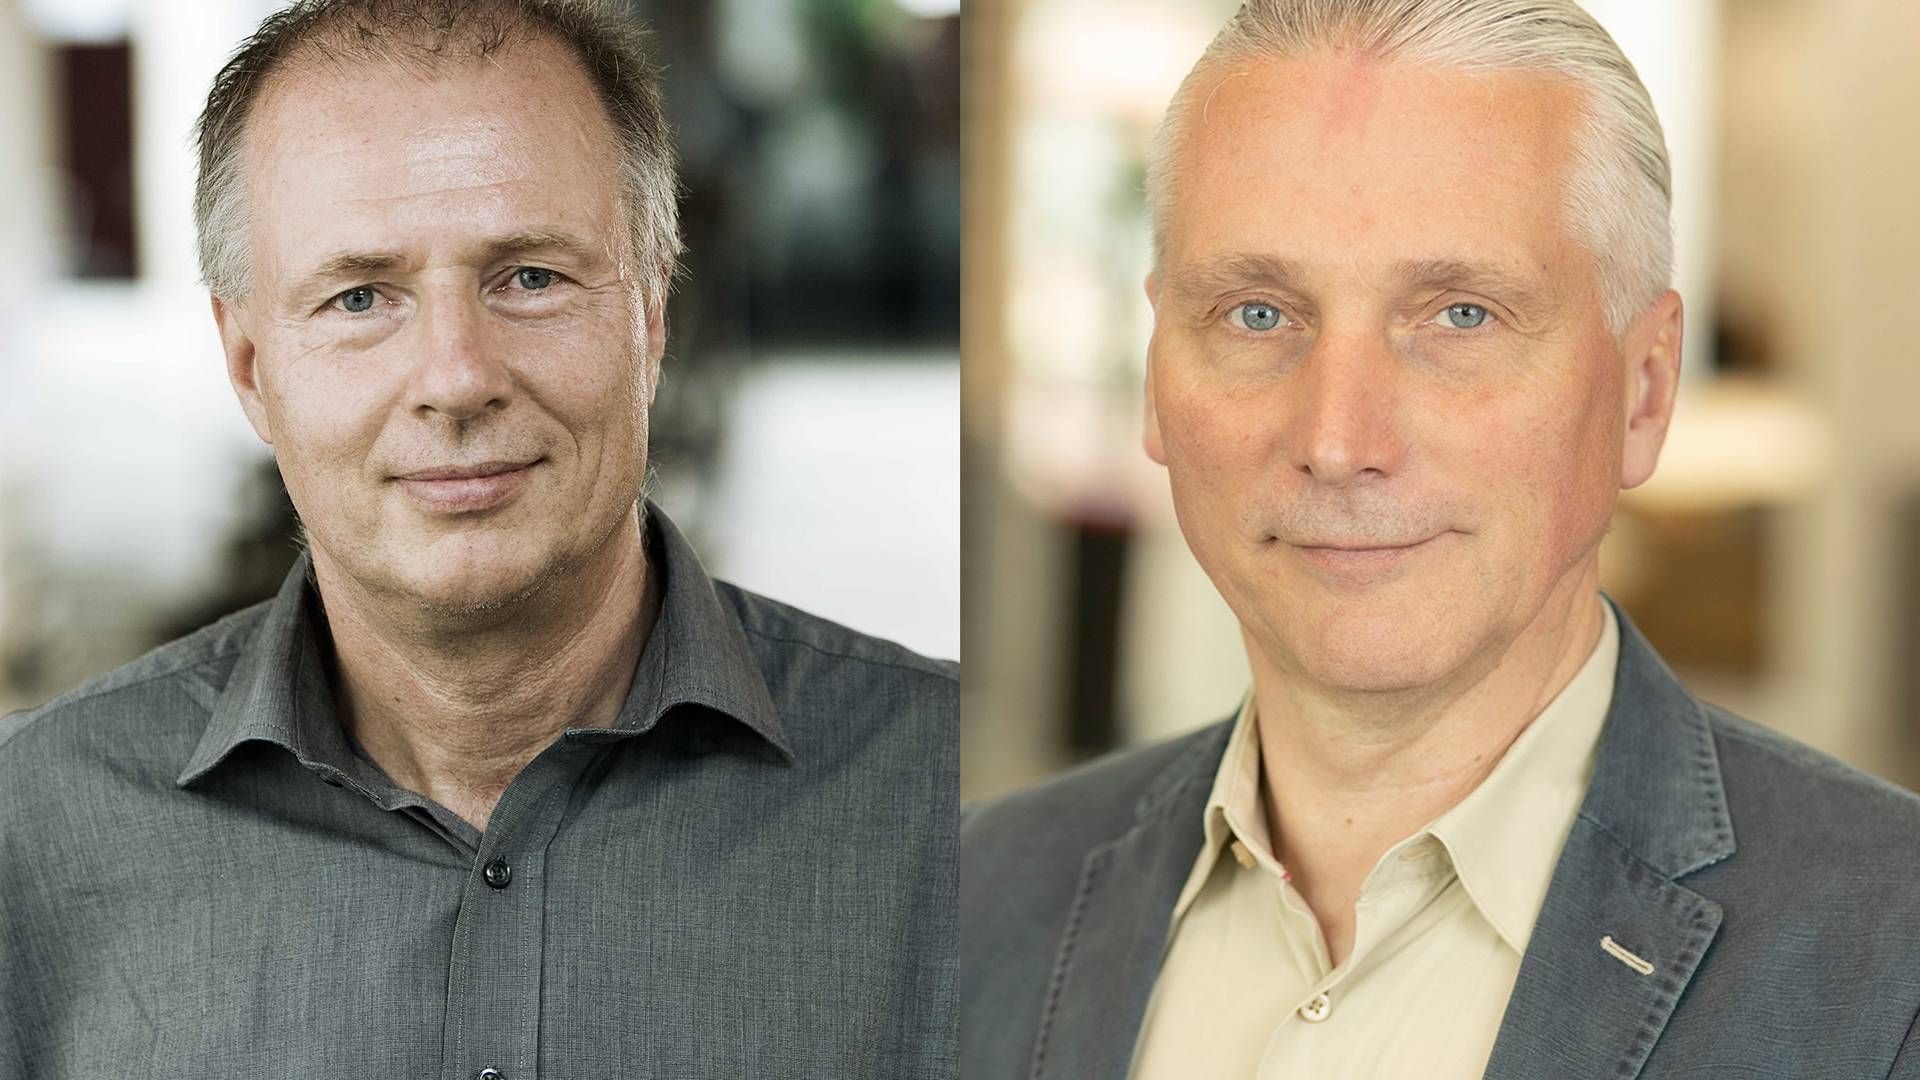 Nils Mulvad og Roger Buch bliver formænd for de to nye advisory boards, som tilknyttes Gravercenter.dk | Foto: Pr, Gravercenter.dk